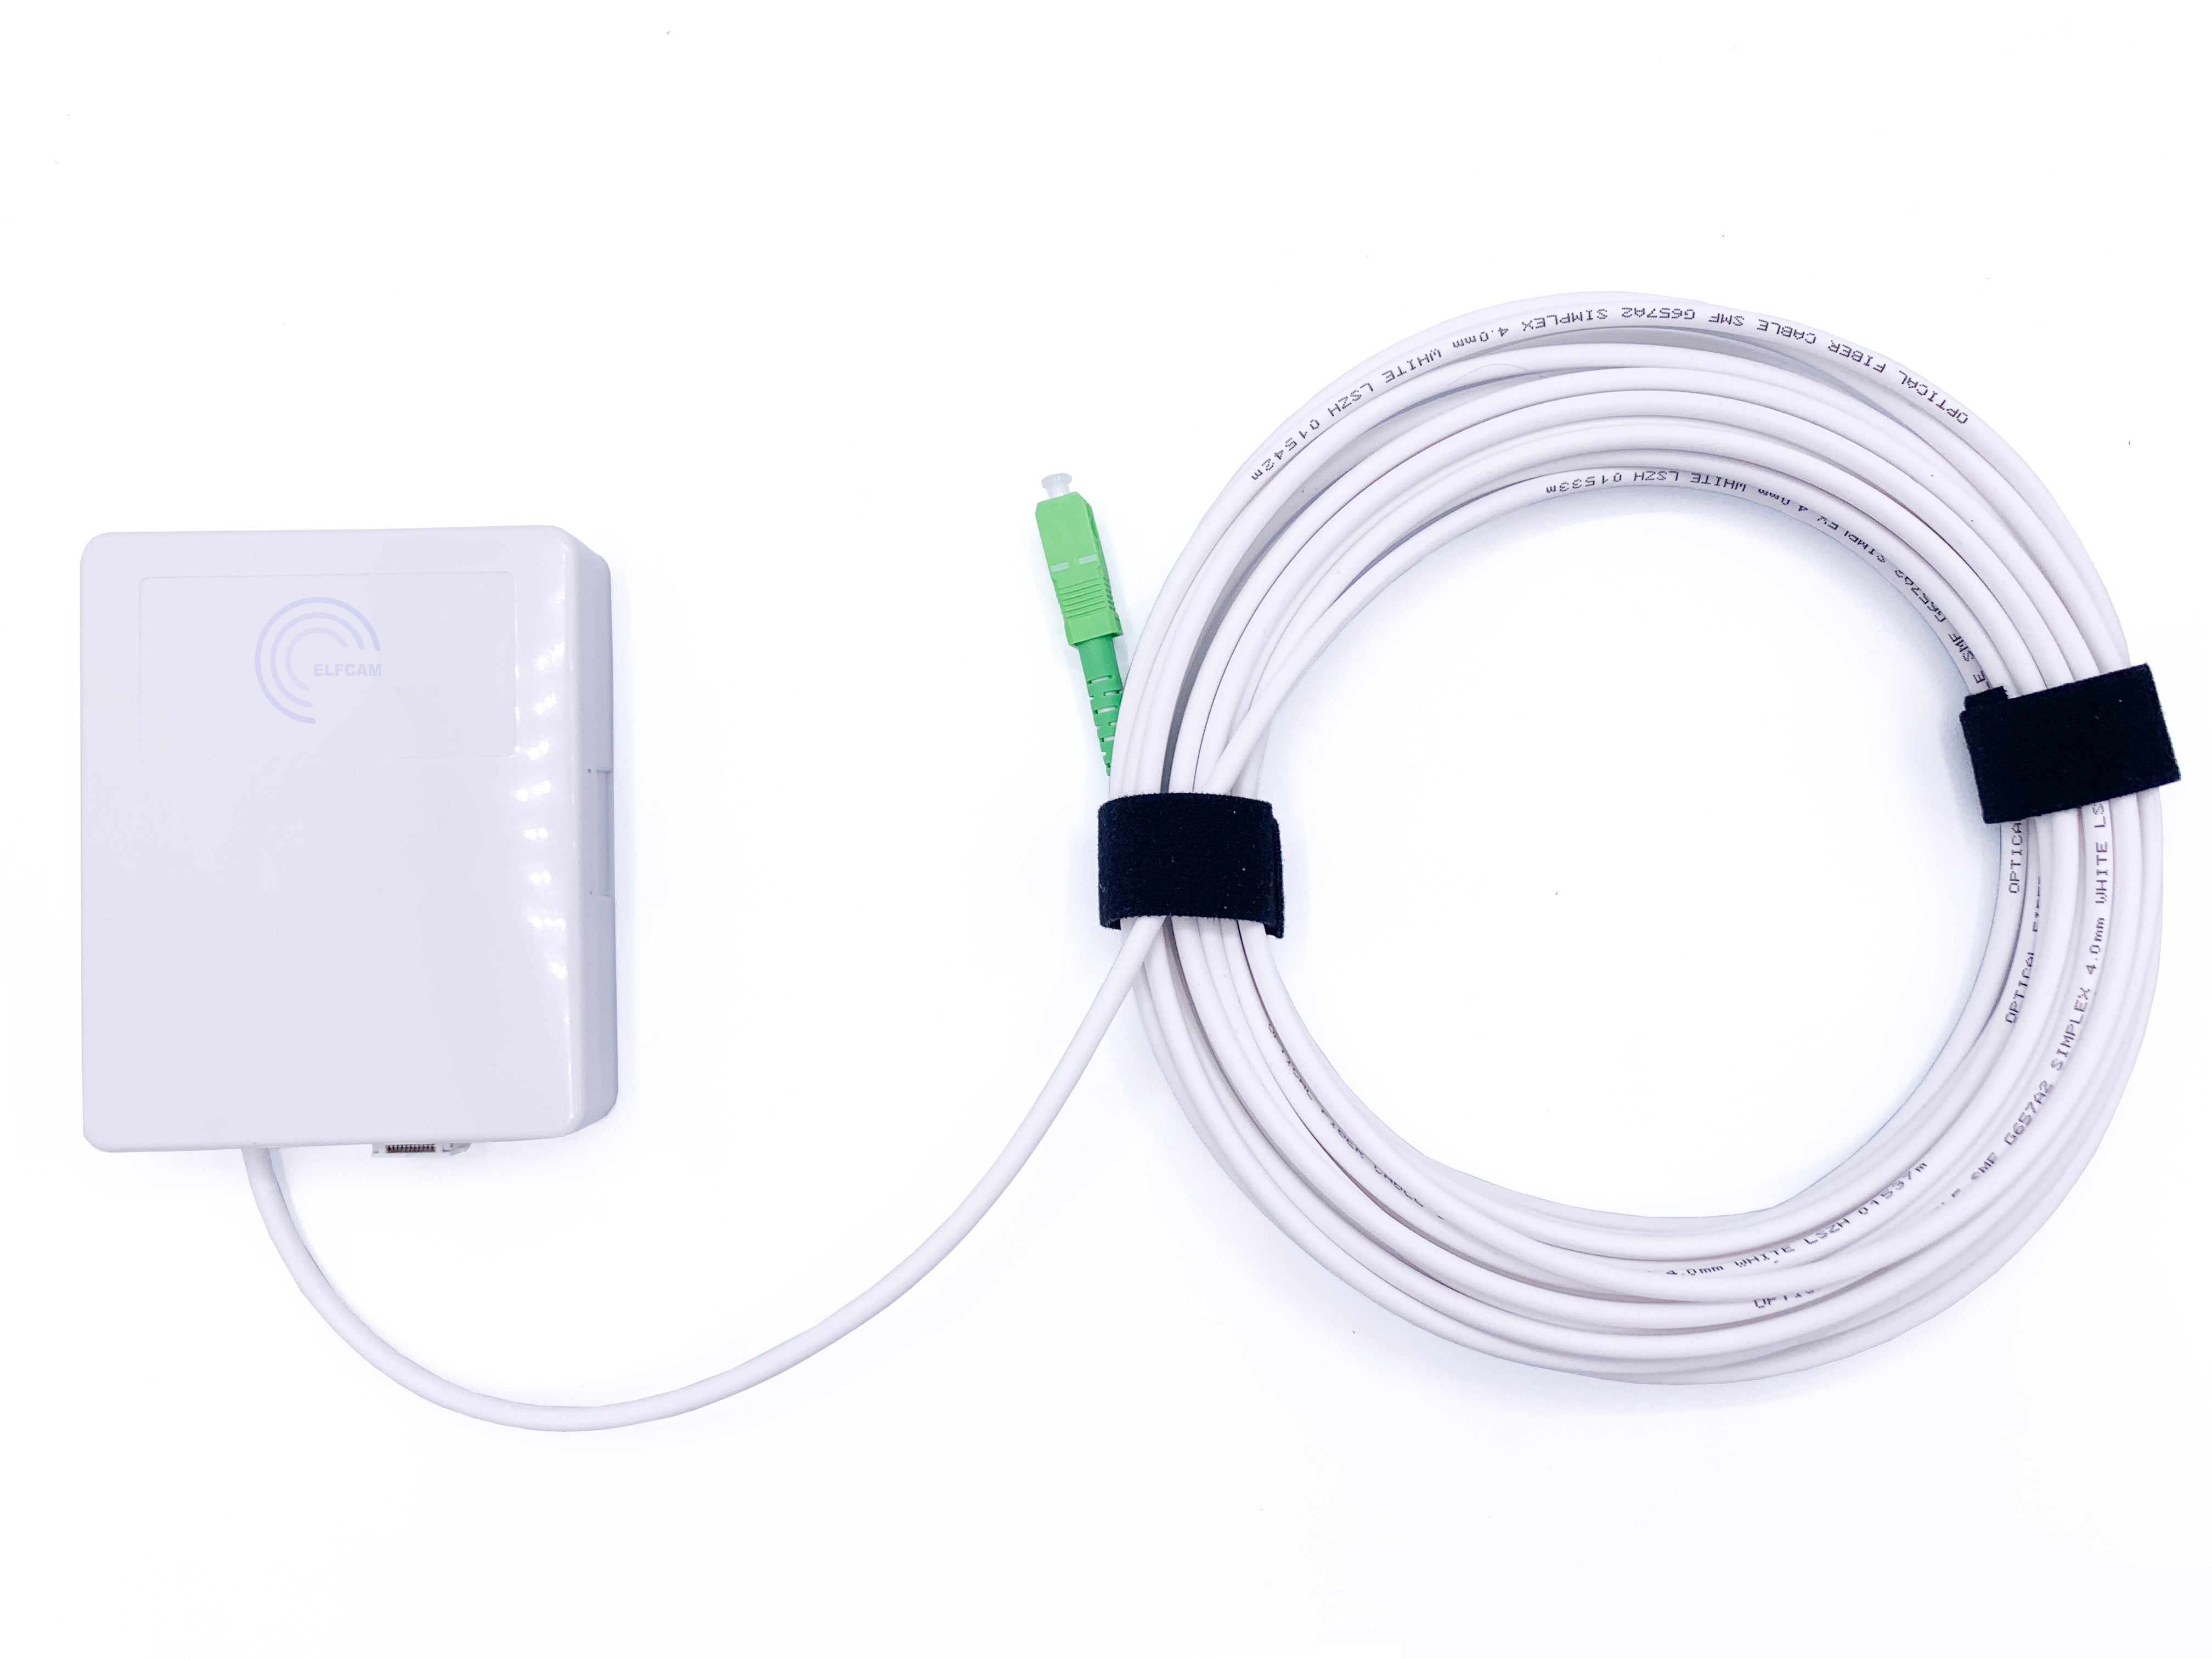 Câble fibre optique pour livebox, sfr box et bbox 20m00 - Conforama